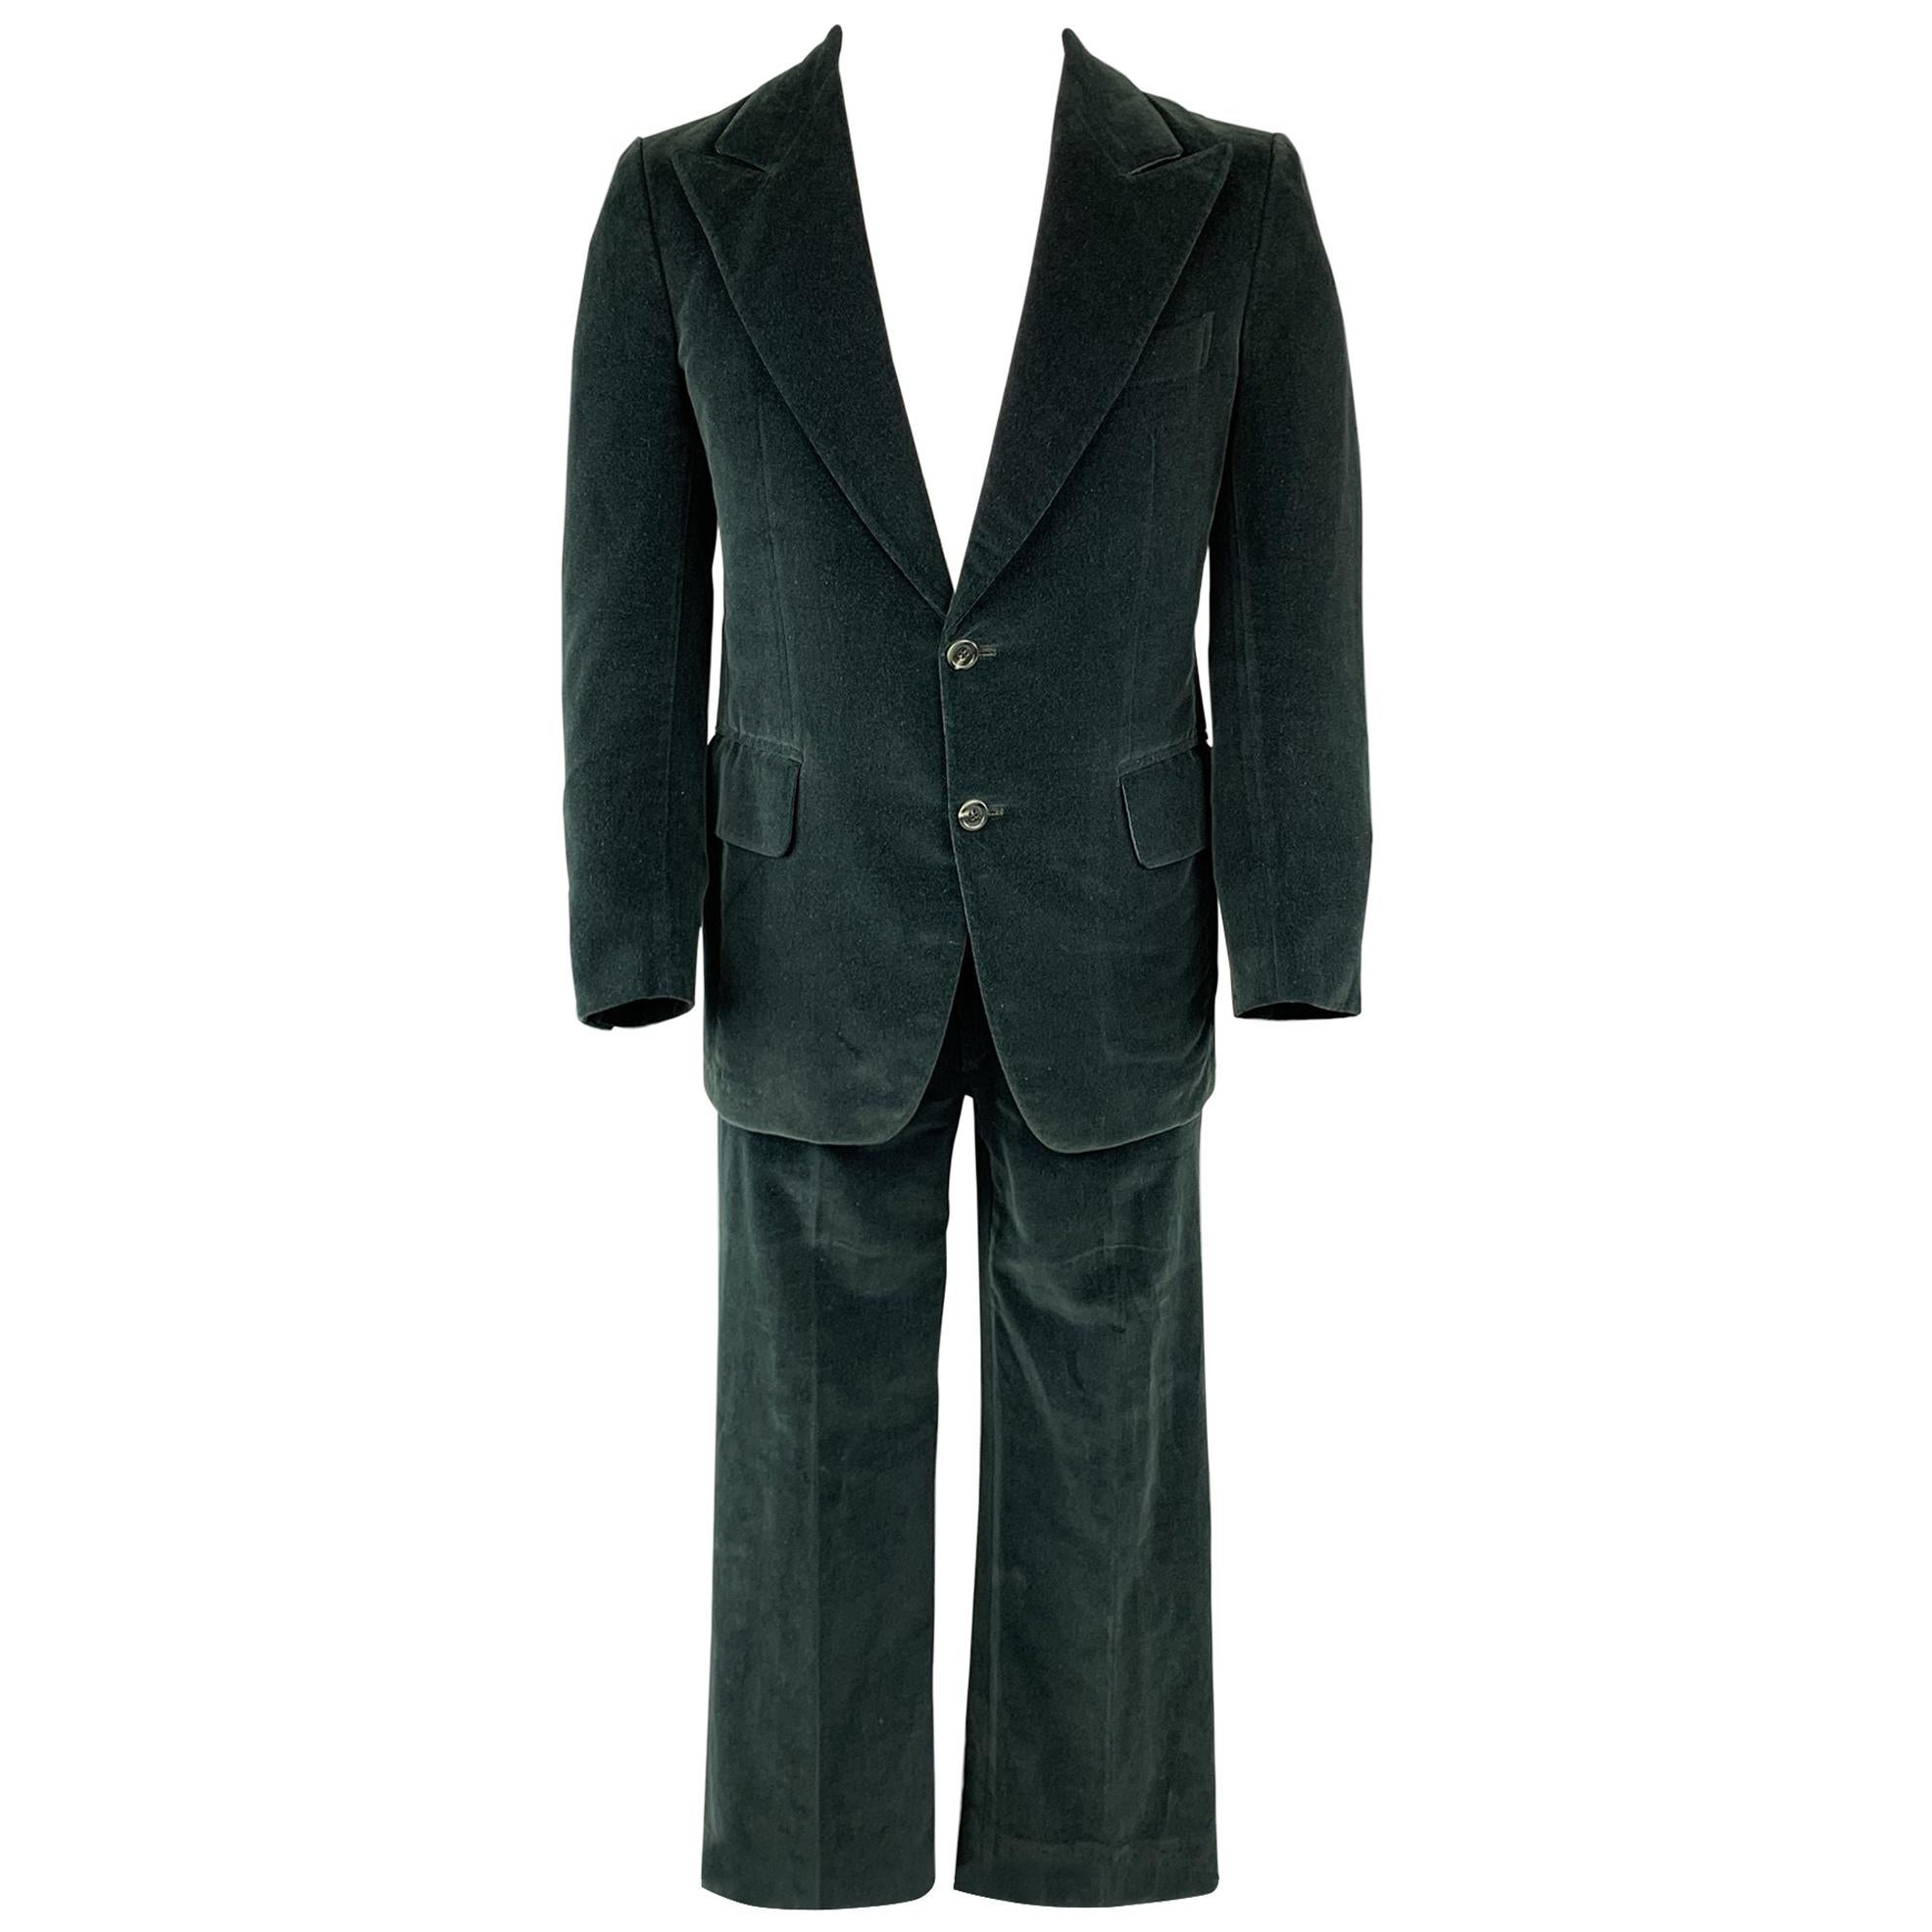 SAKS FIFTH AVENUE Green Velvet Suit - Size US 38 Vintage